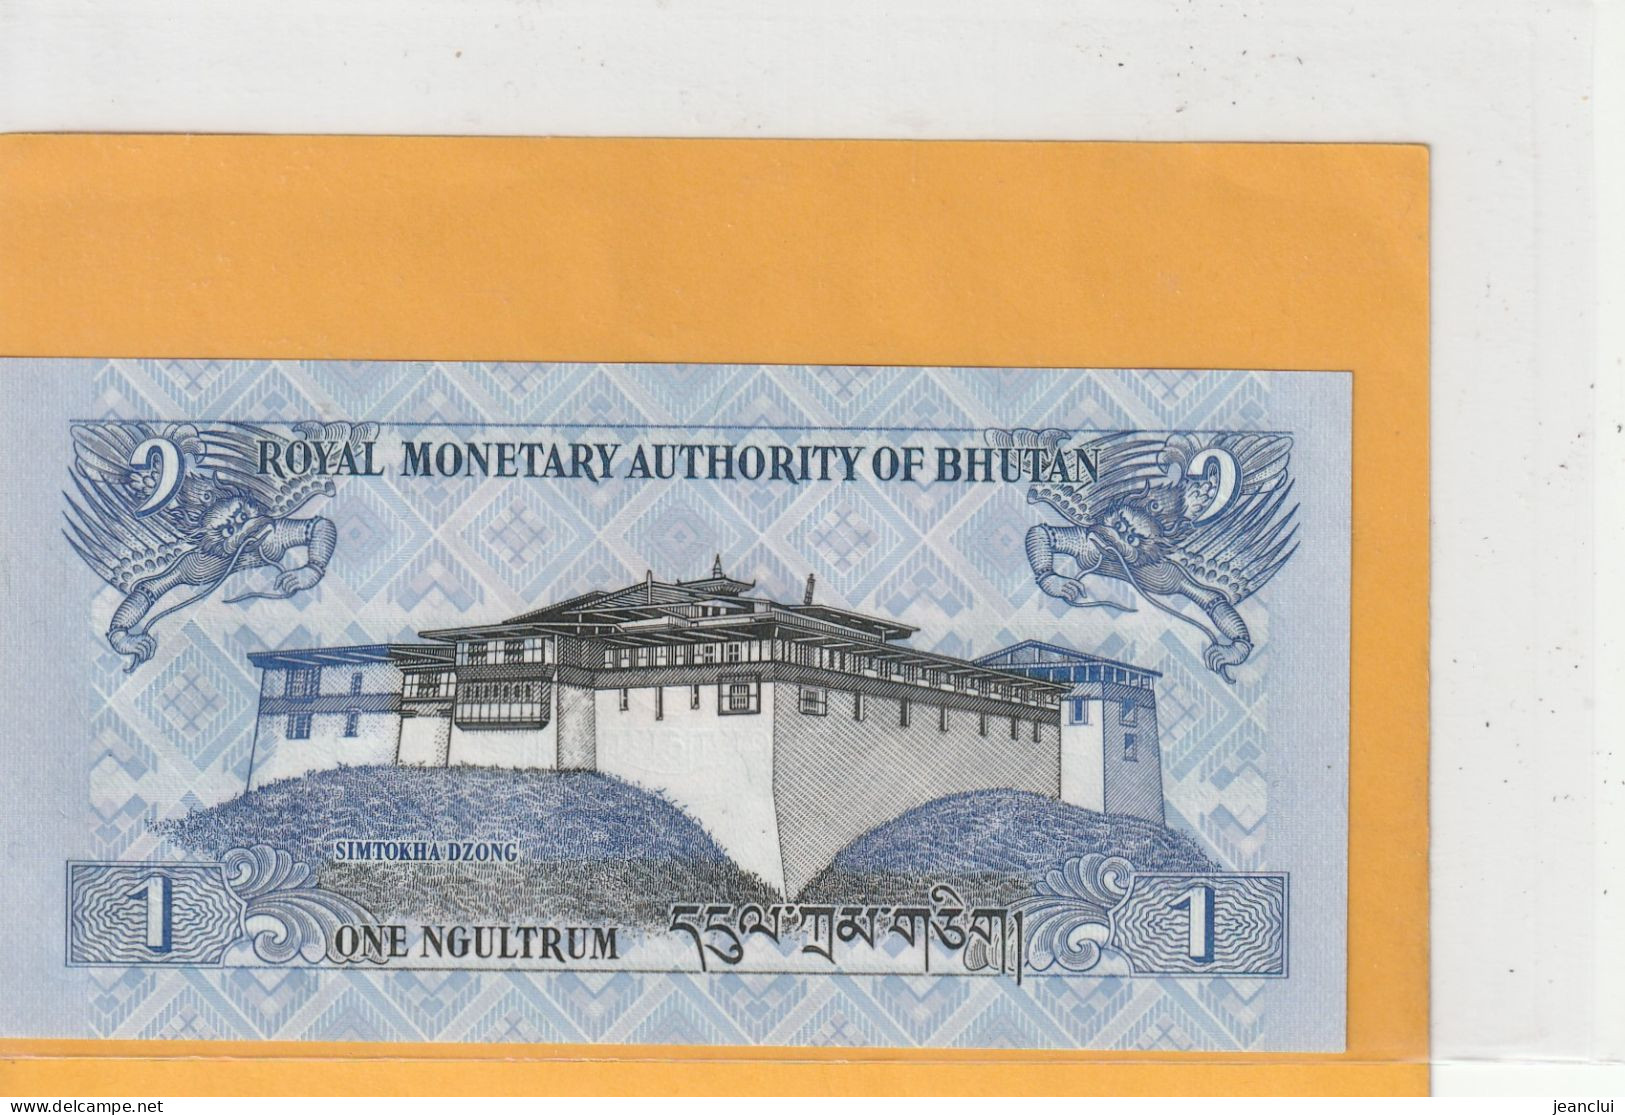 ROYAL MONETARY AUTHORITY OF BHUTAN .  1 NGULTRUM  . 2013   . N°  I 11659662  .  2 SCANNES  .  BILLET ETAT LUXE - Bhoutan